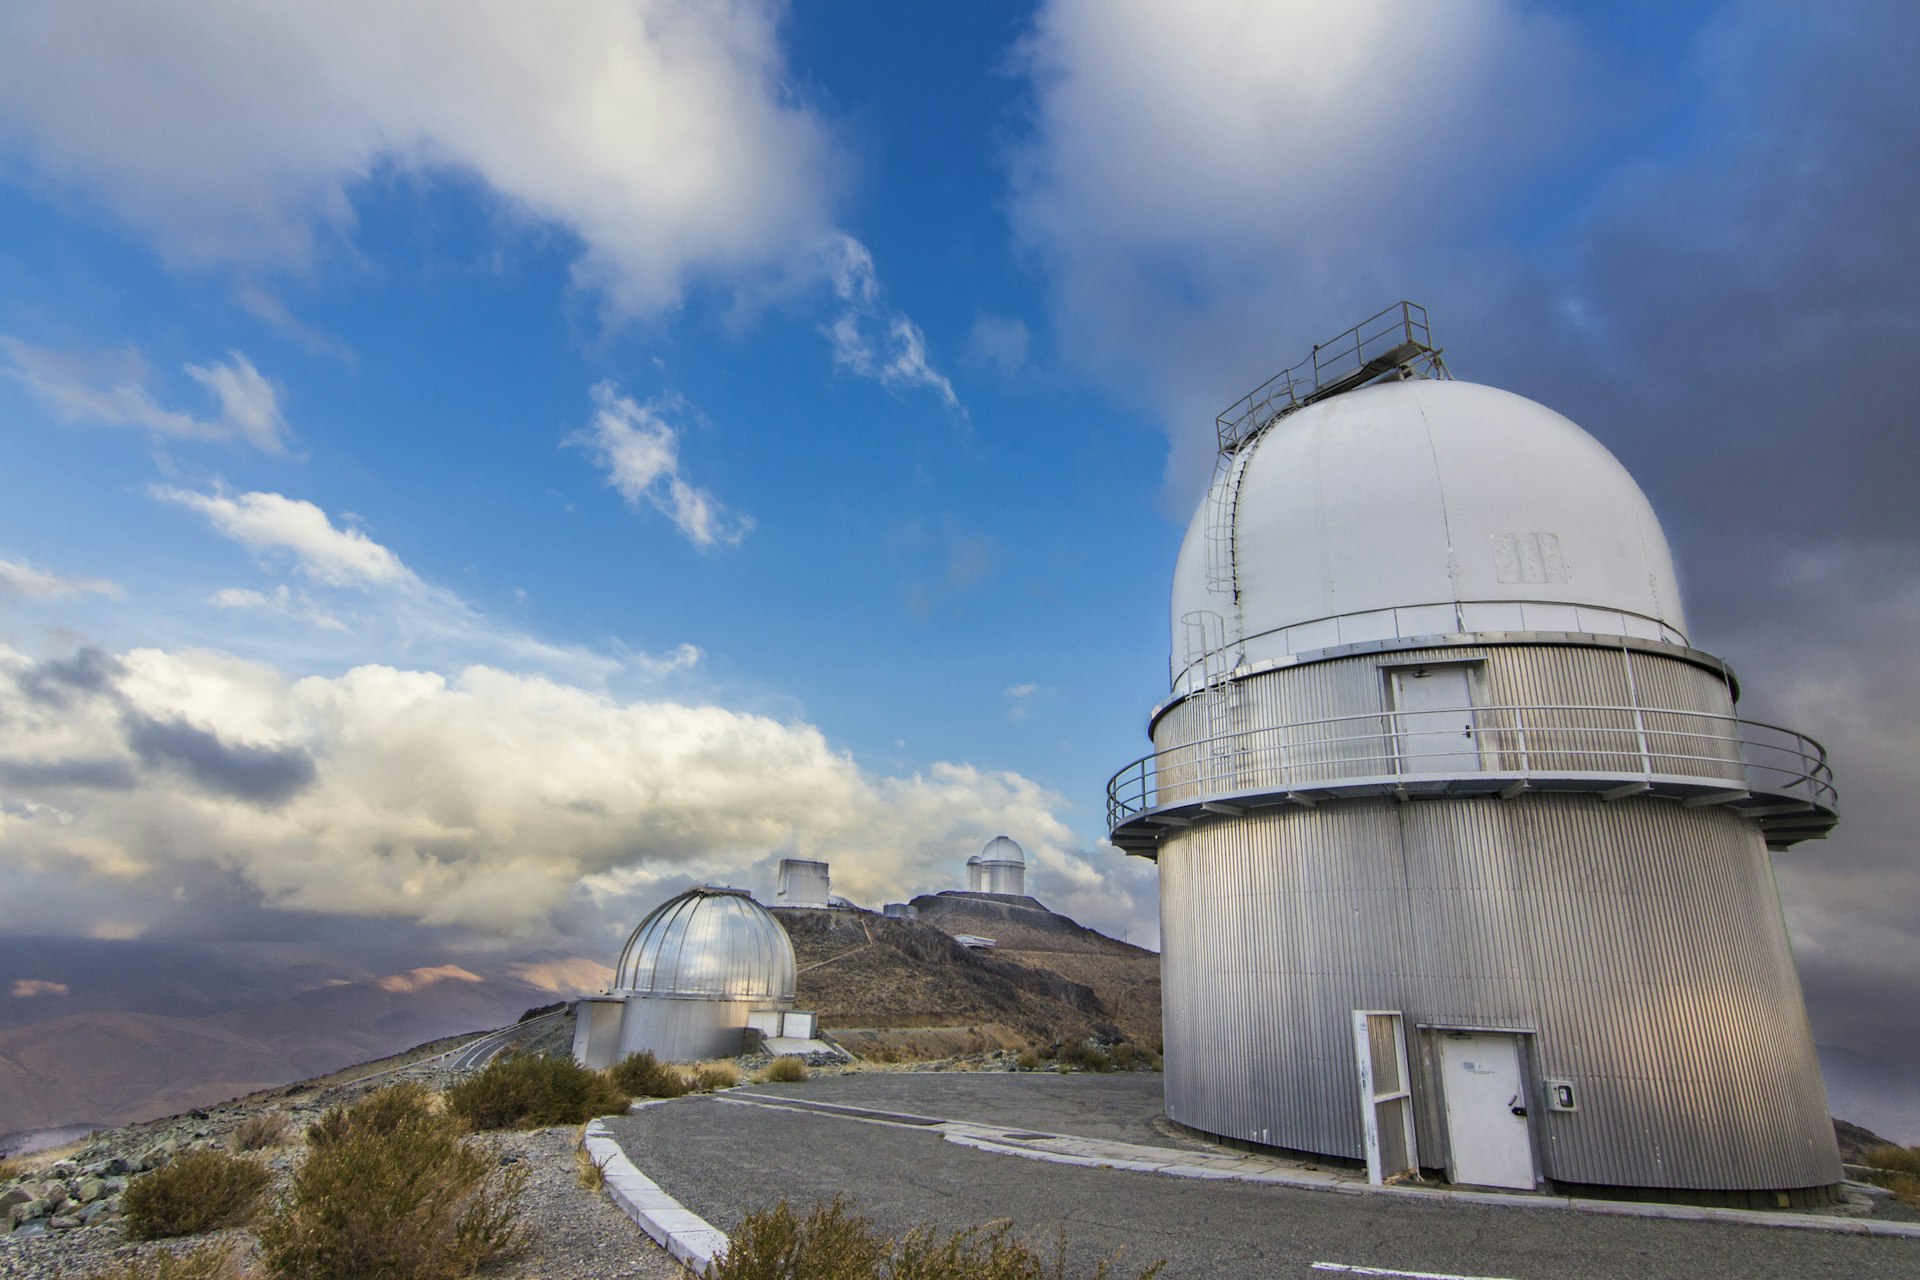 Several domed observatories lining a high ridge in a desert landscape